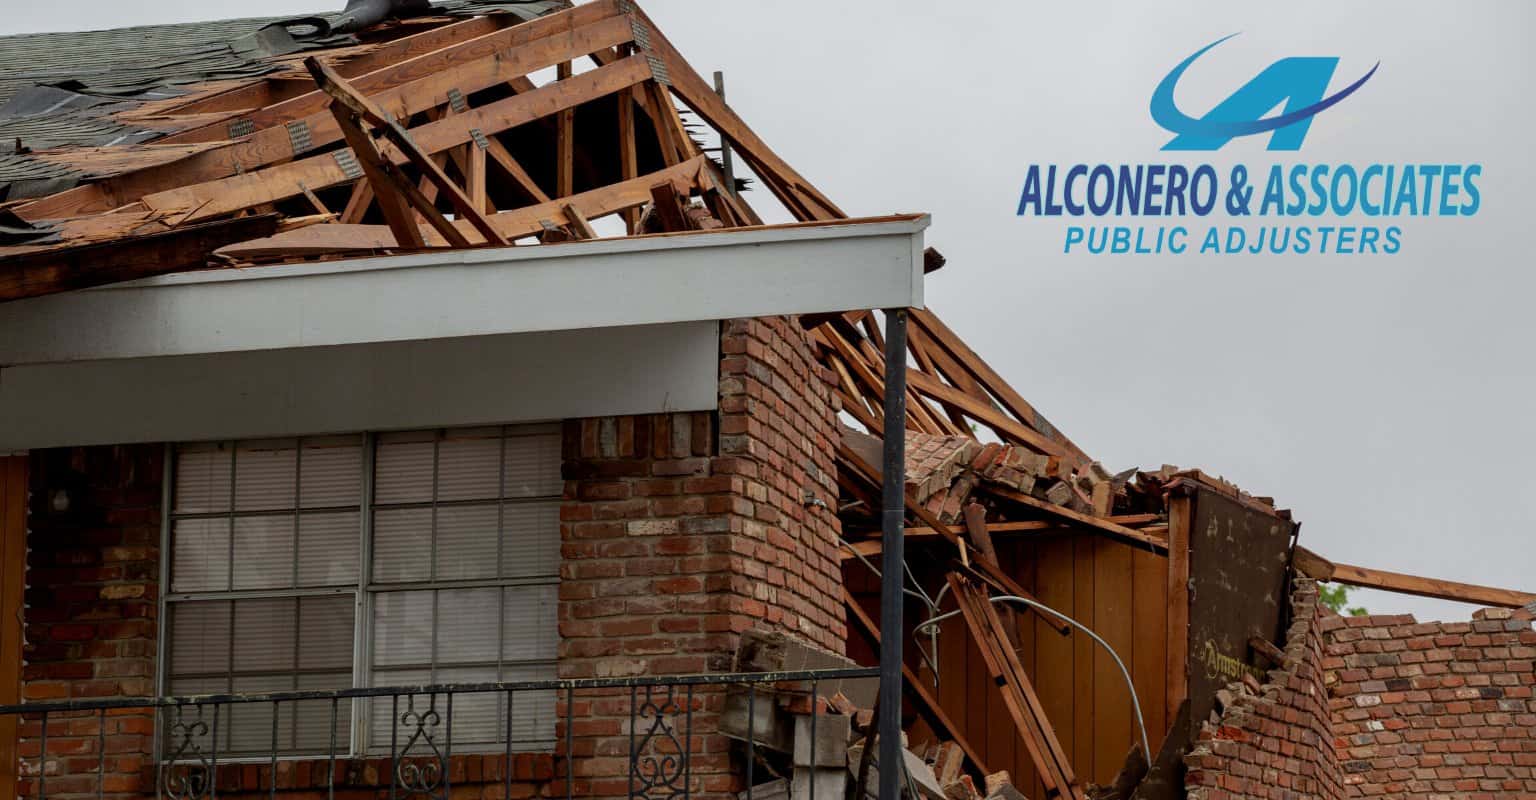 Alconero and Associates Ajustador Publicos Assisting with Property Damage Claim in Florida